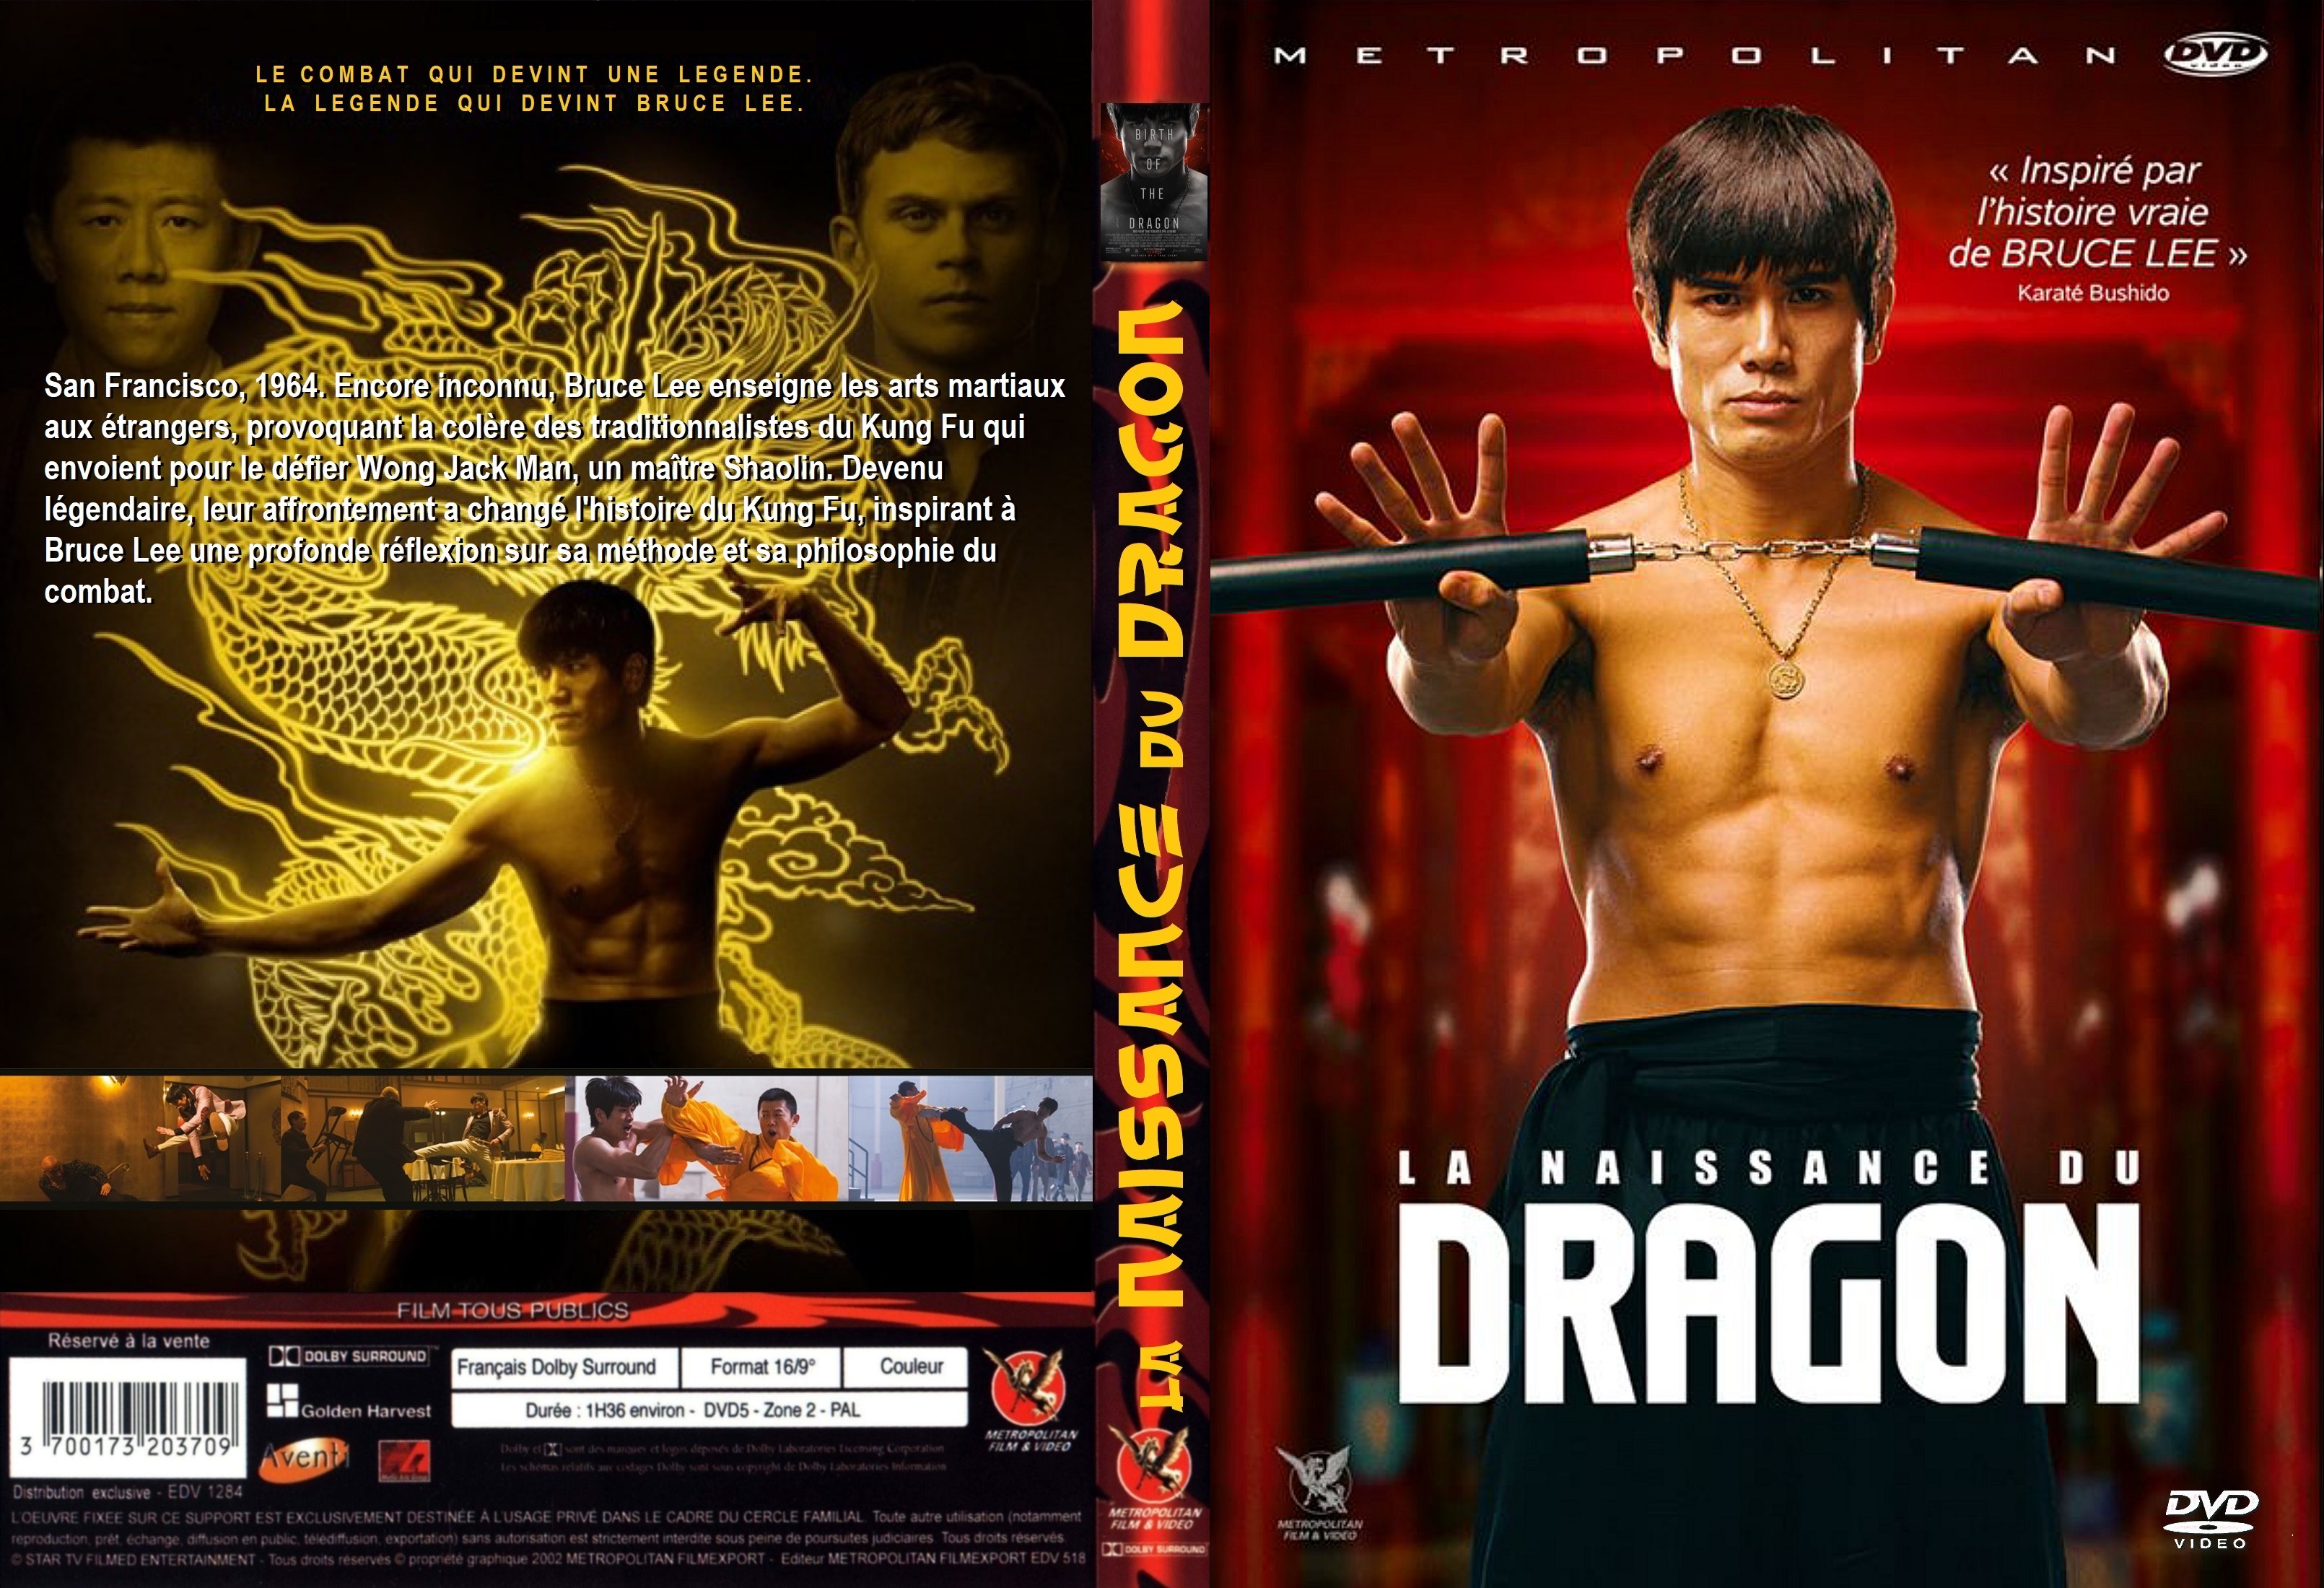 Jaquette DVD La naissance du dragon custom v2